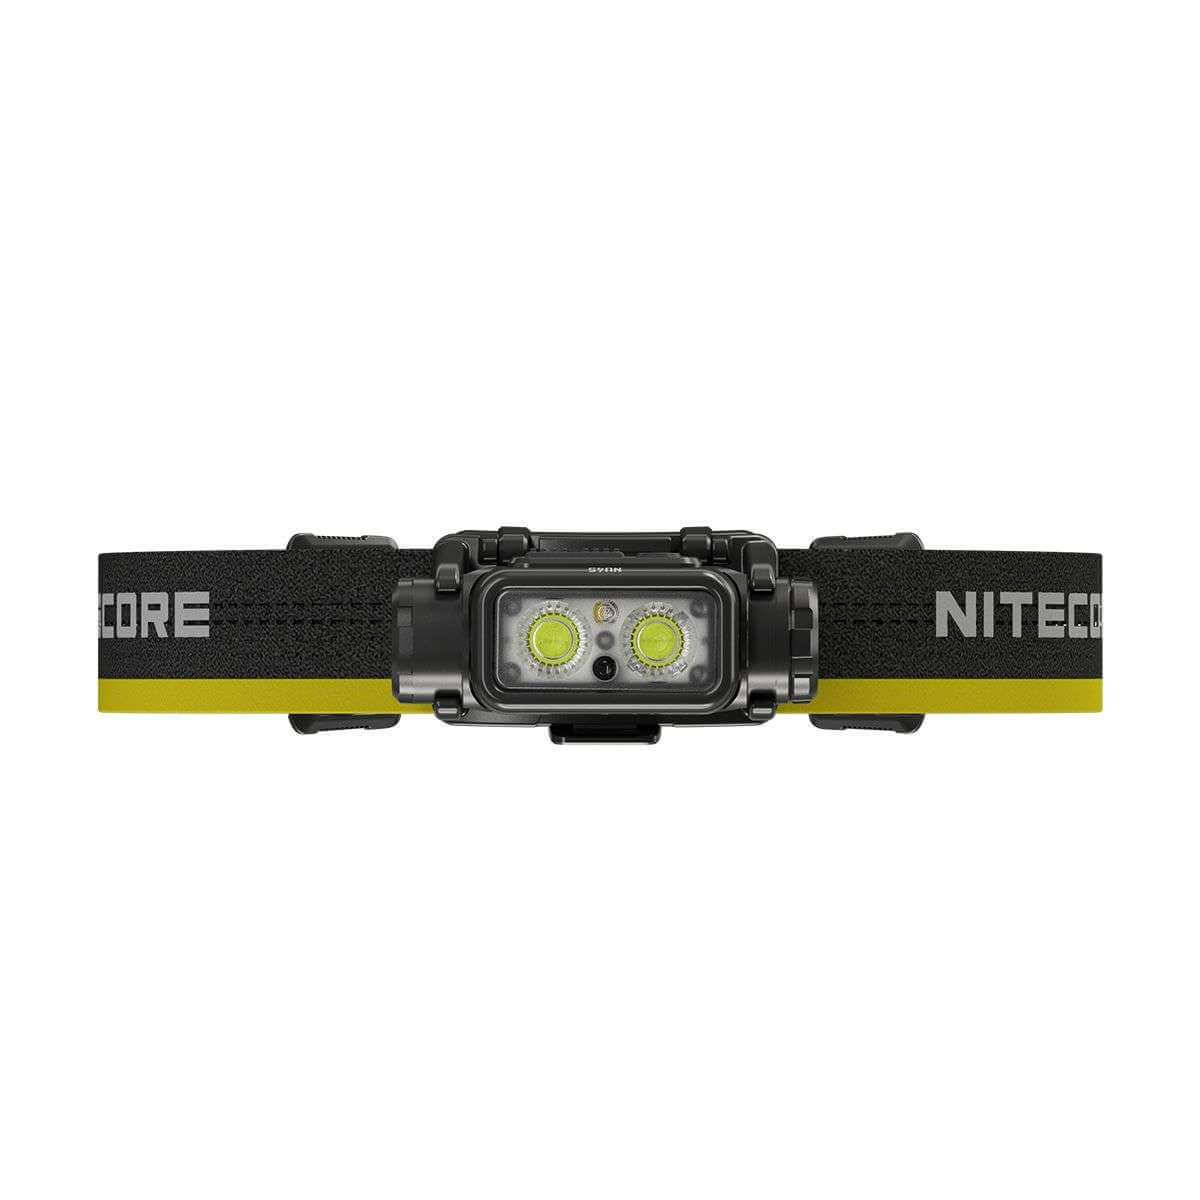 Nitecore NU45 Lightweight 18650 Rechargeable Headlamp